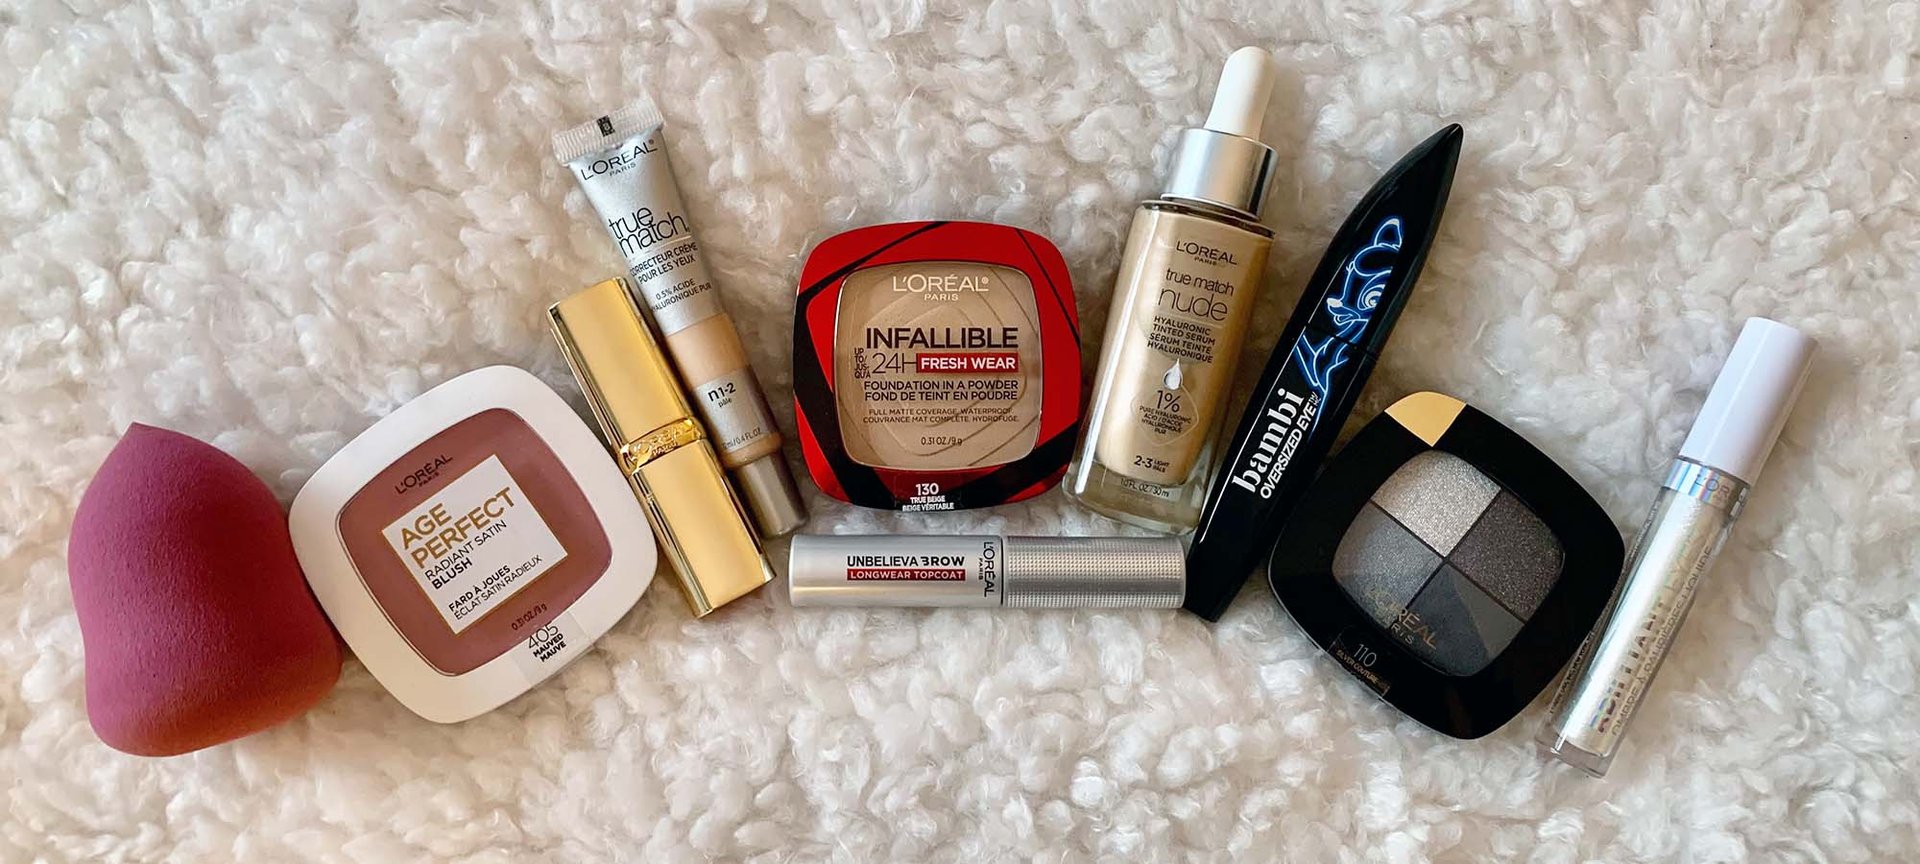 10 Essentials For A Beginner Makeup Kit - L'Oréal Paris